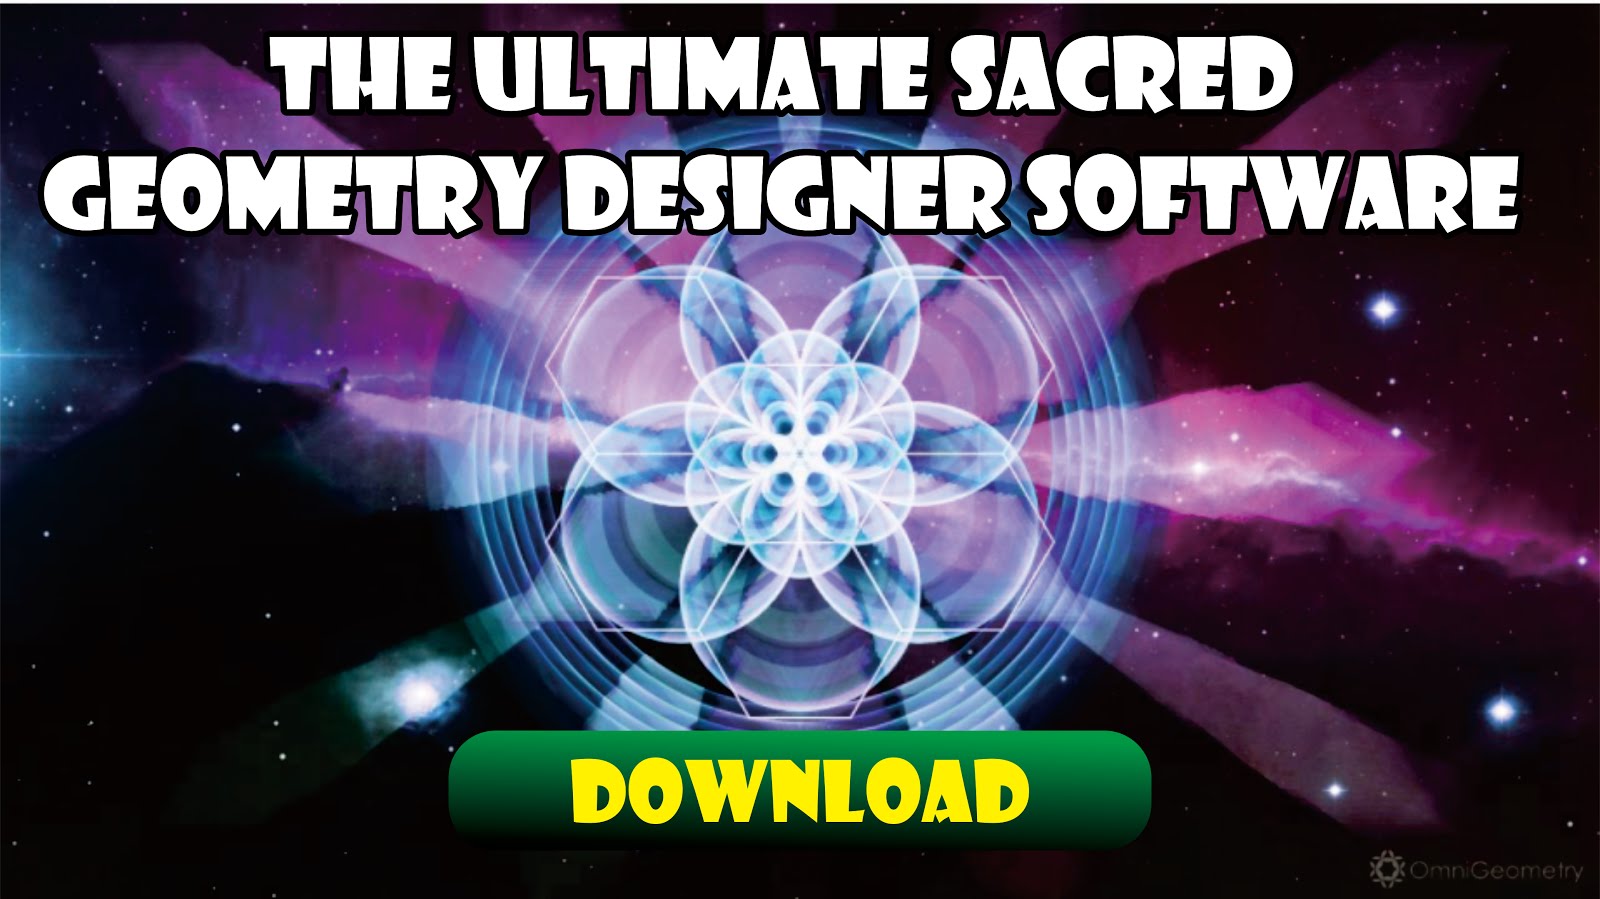 The Ultimate Sacred Geometry Designer Software